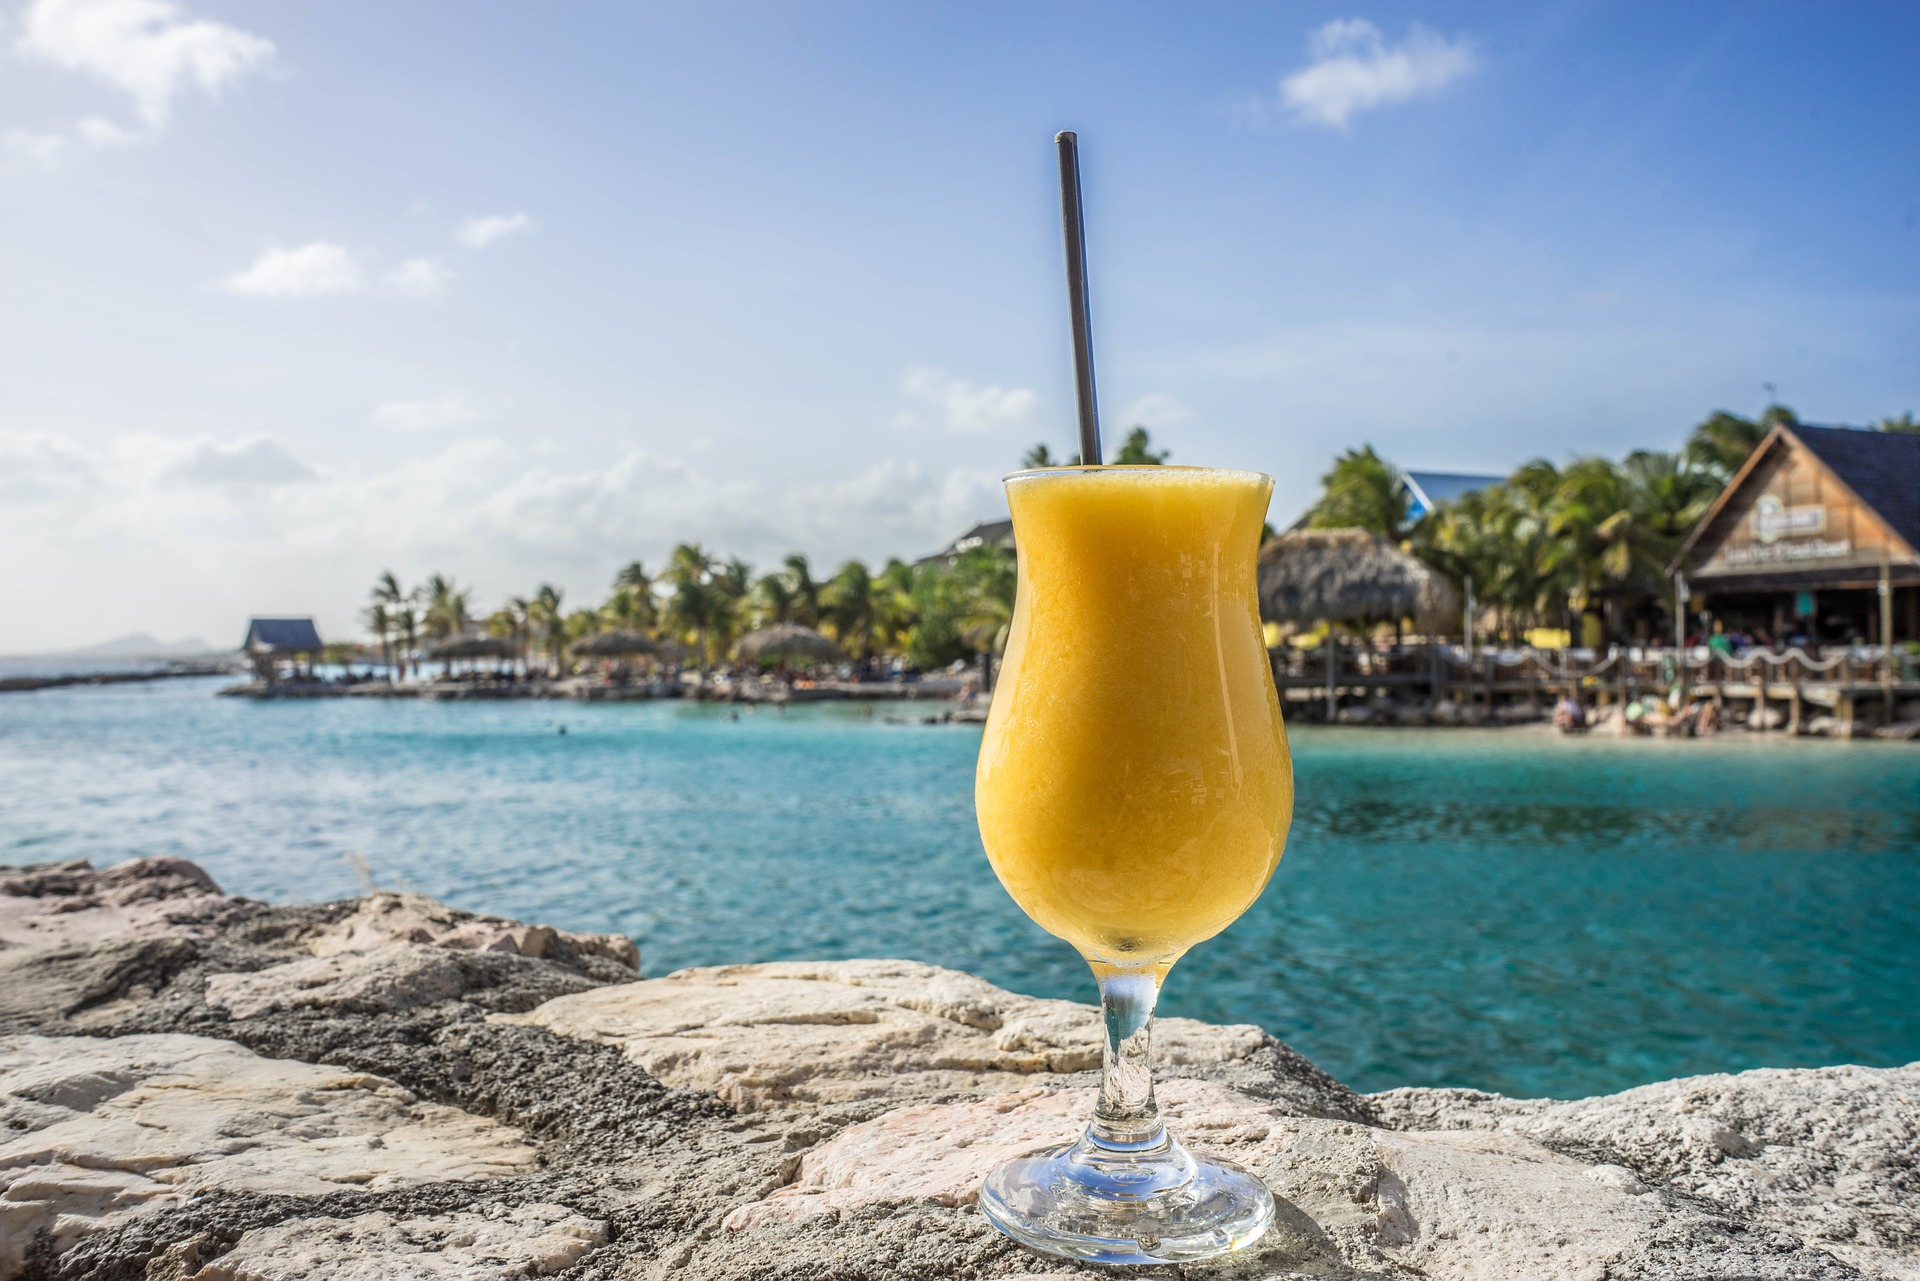 Enjoy a daiquiri on the beach for your next Florida Keys vacation